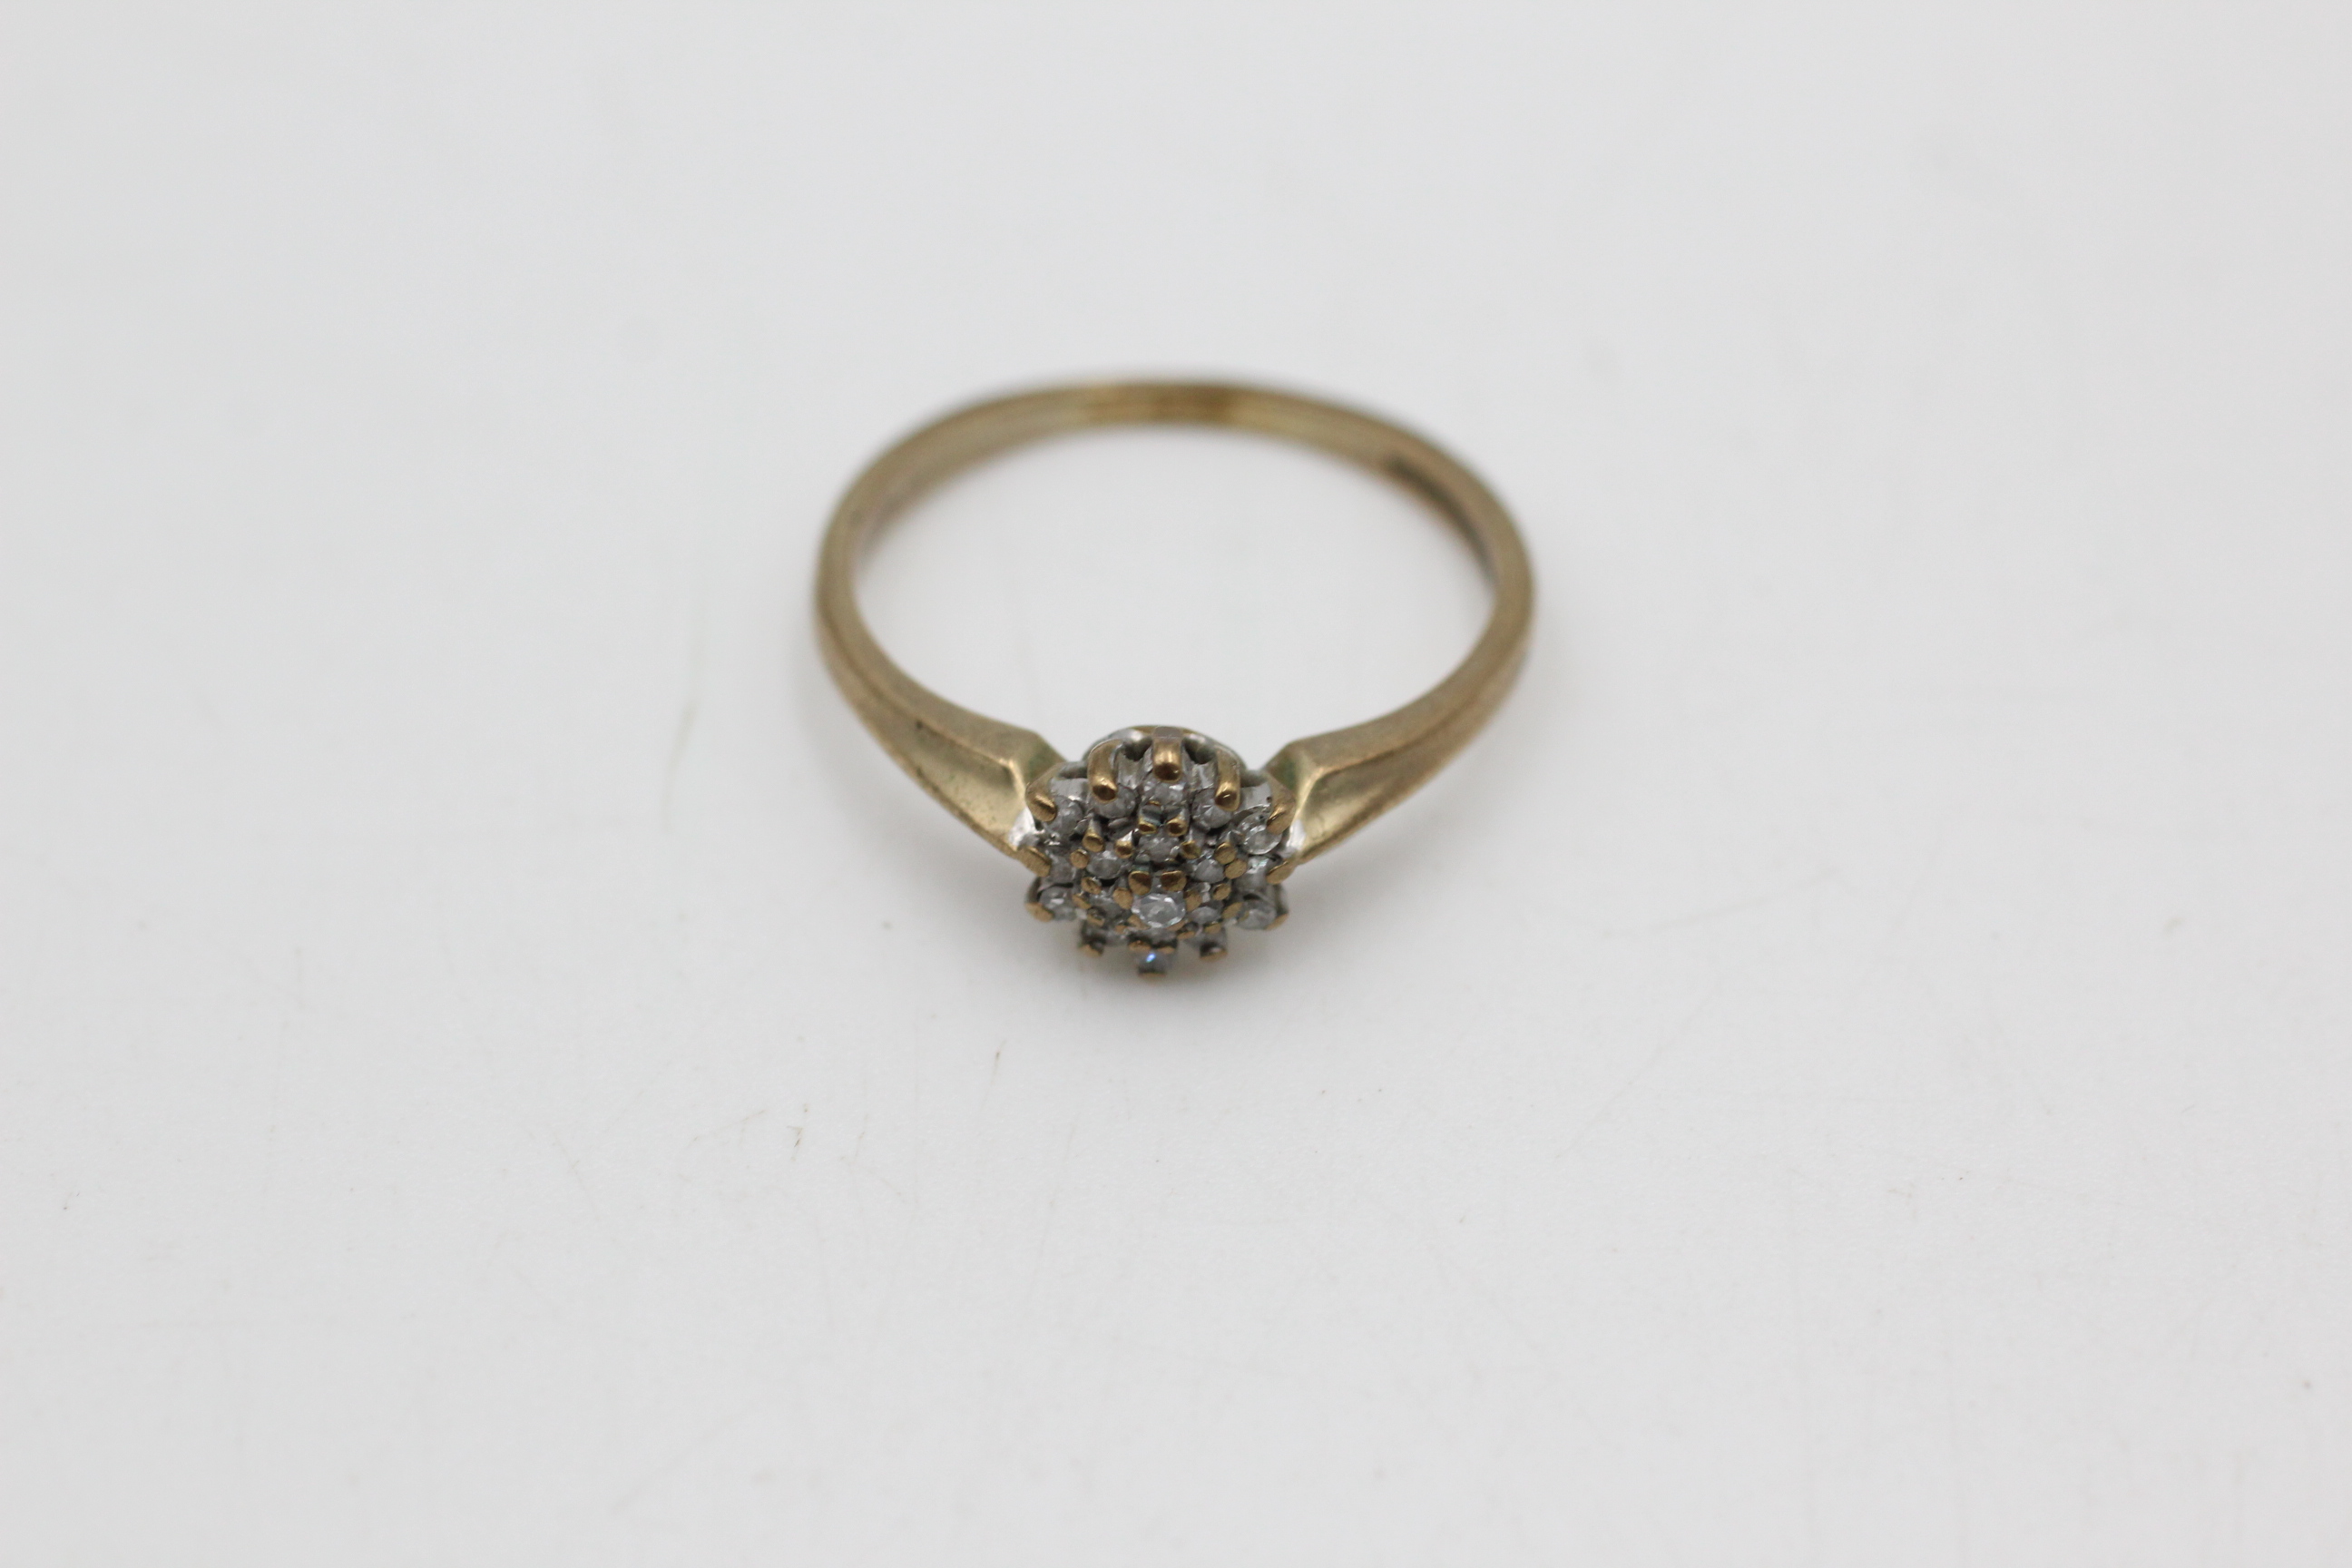 9ct gold gemstone cluster ring (2g)